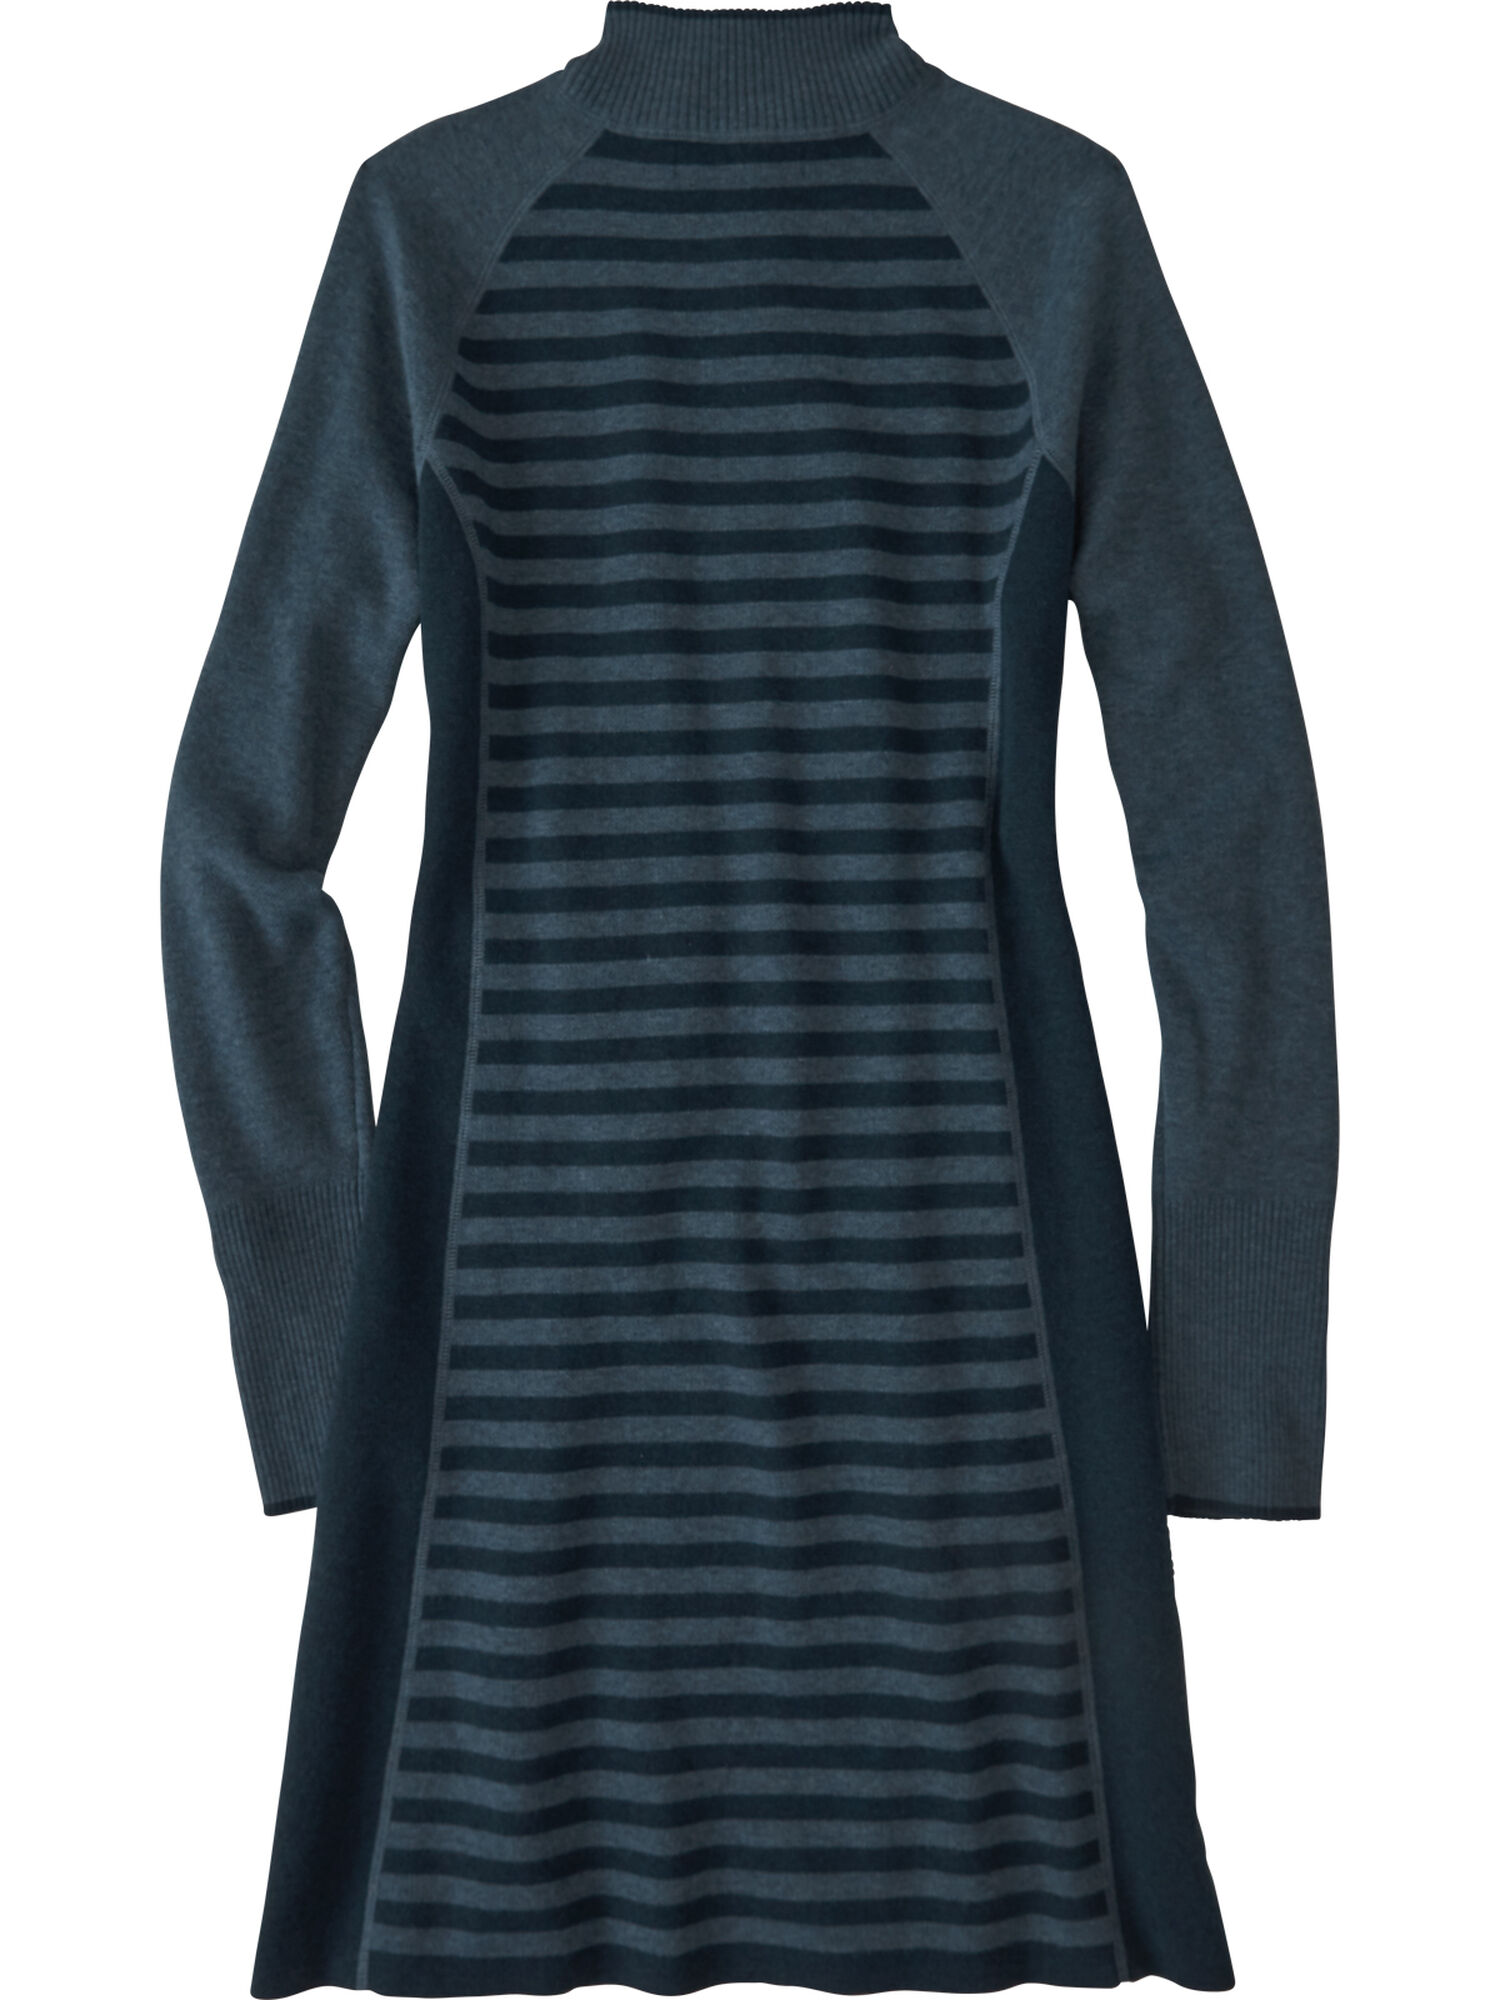 Sweater Dress - Super Power 1/4 Zip Colorblock | Title Nine